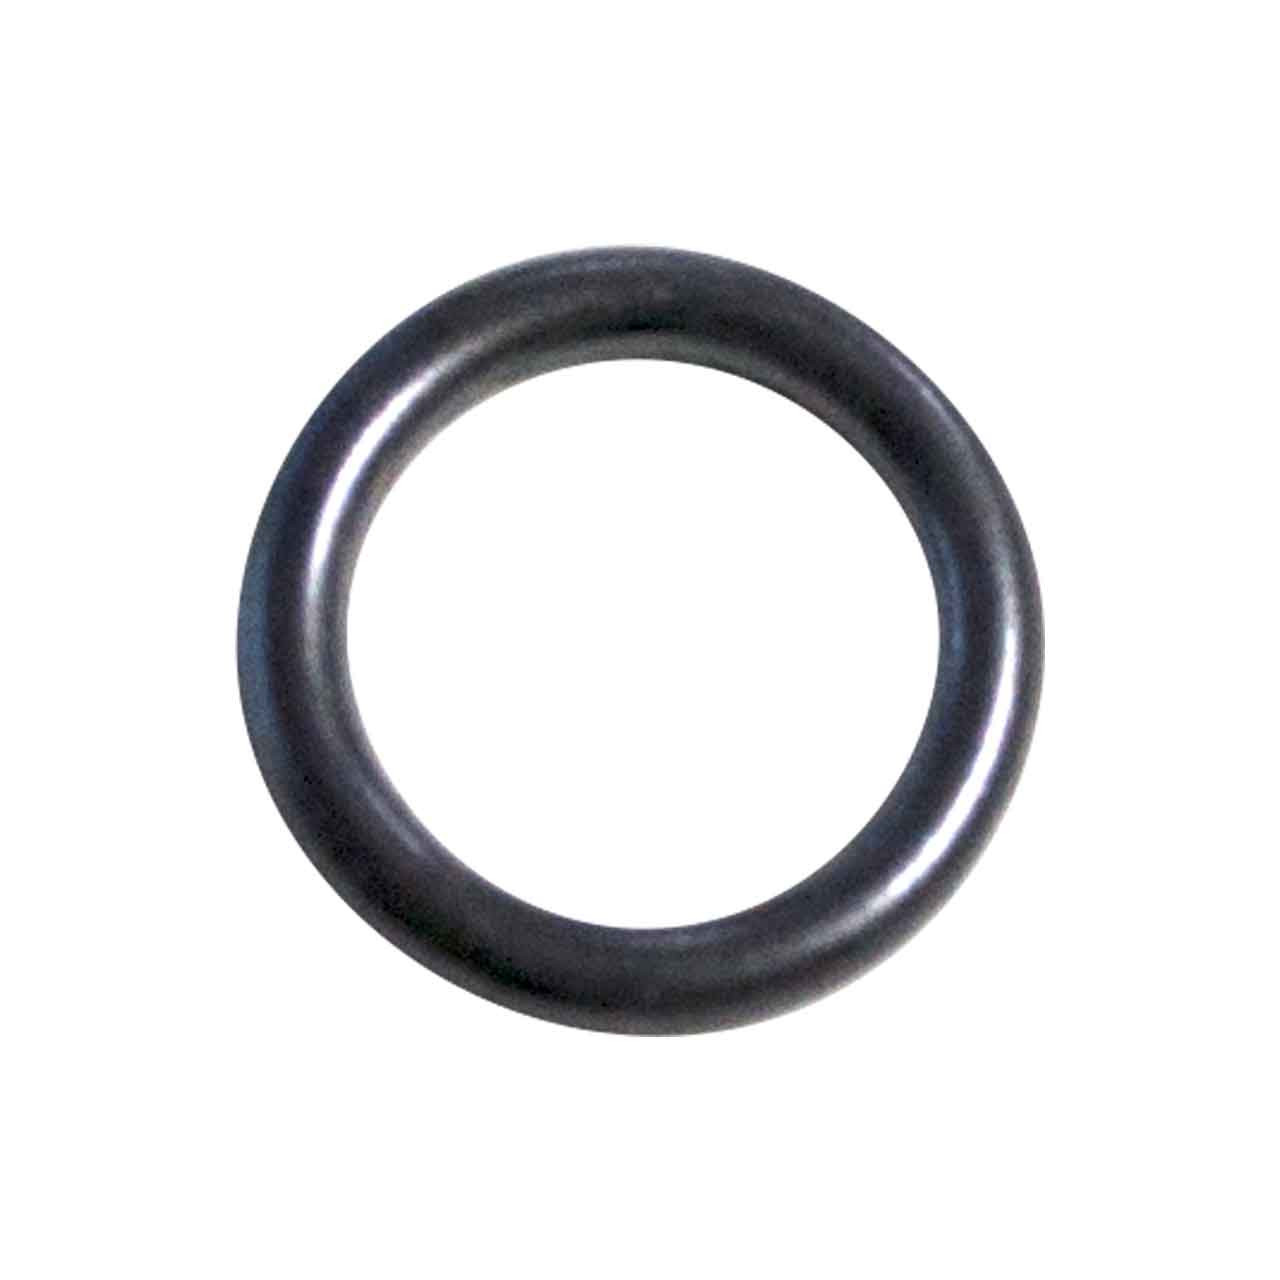 Miller Smith MW15 O-Ring Seal Rings, Medium Duty, 25 pack